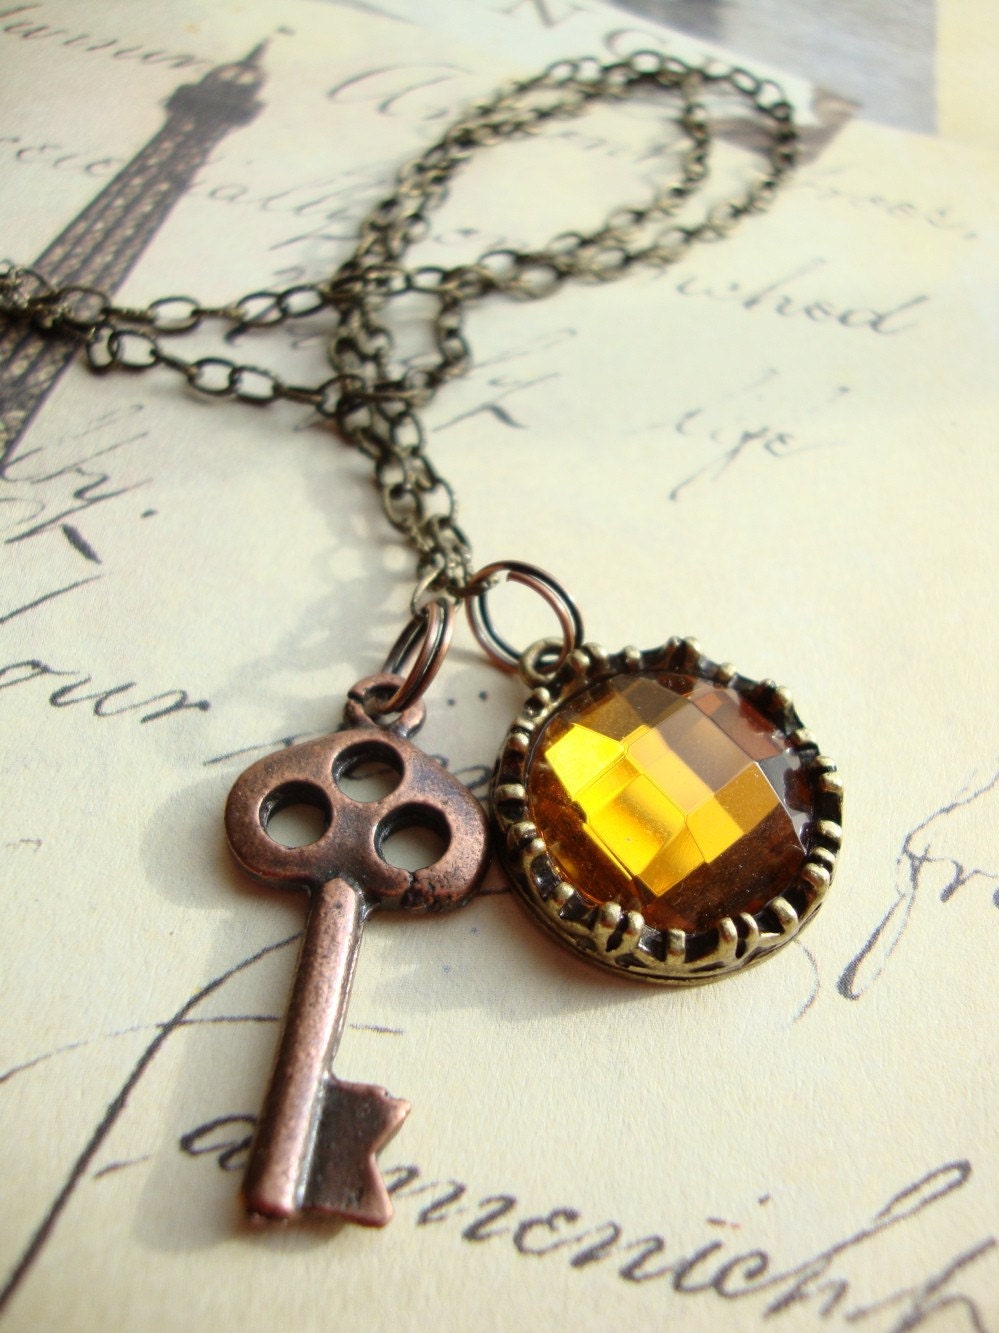 Copper Key and Amber Gem Vintage Inspired Necklace